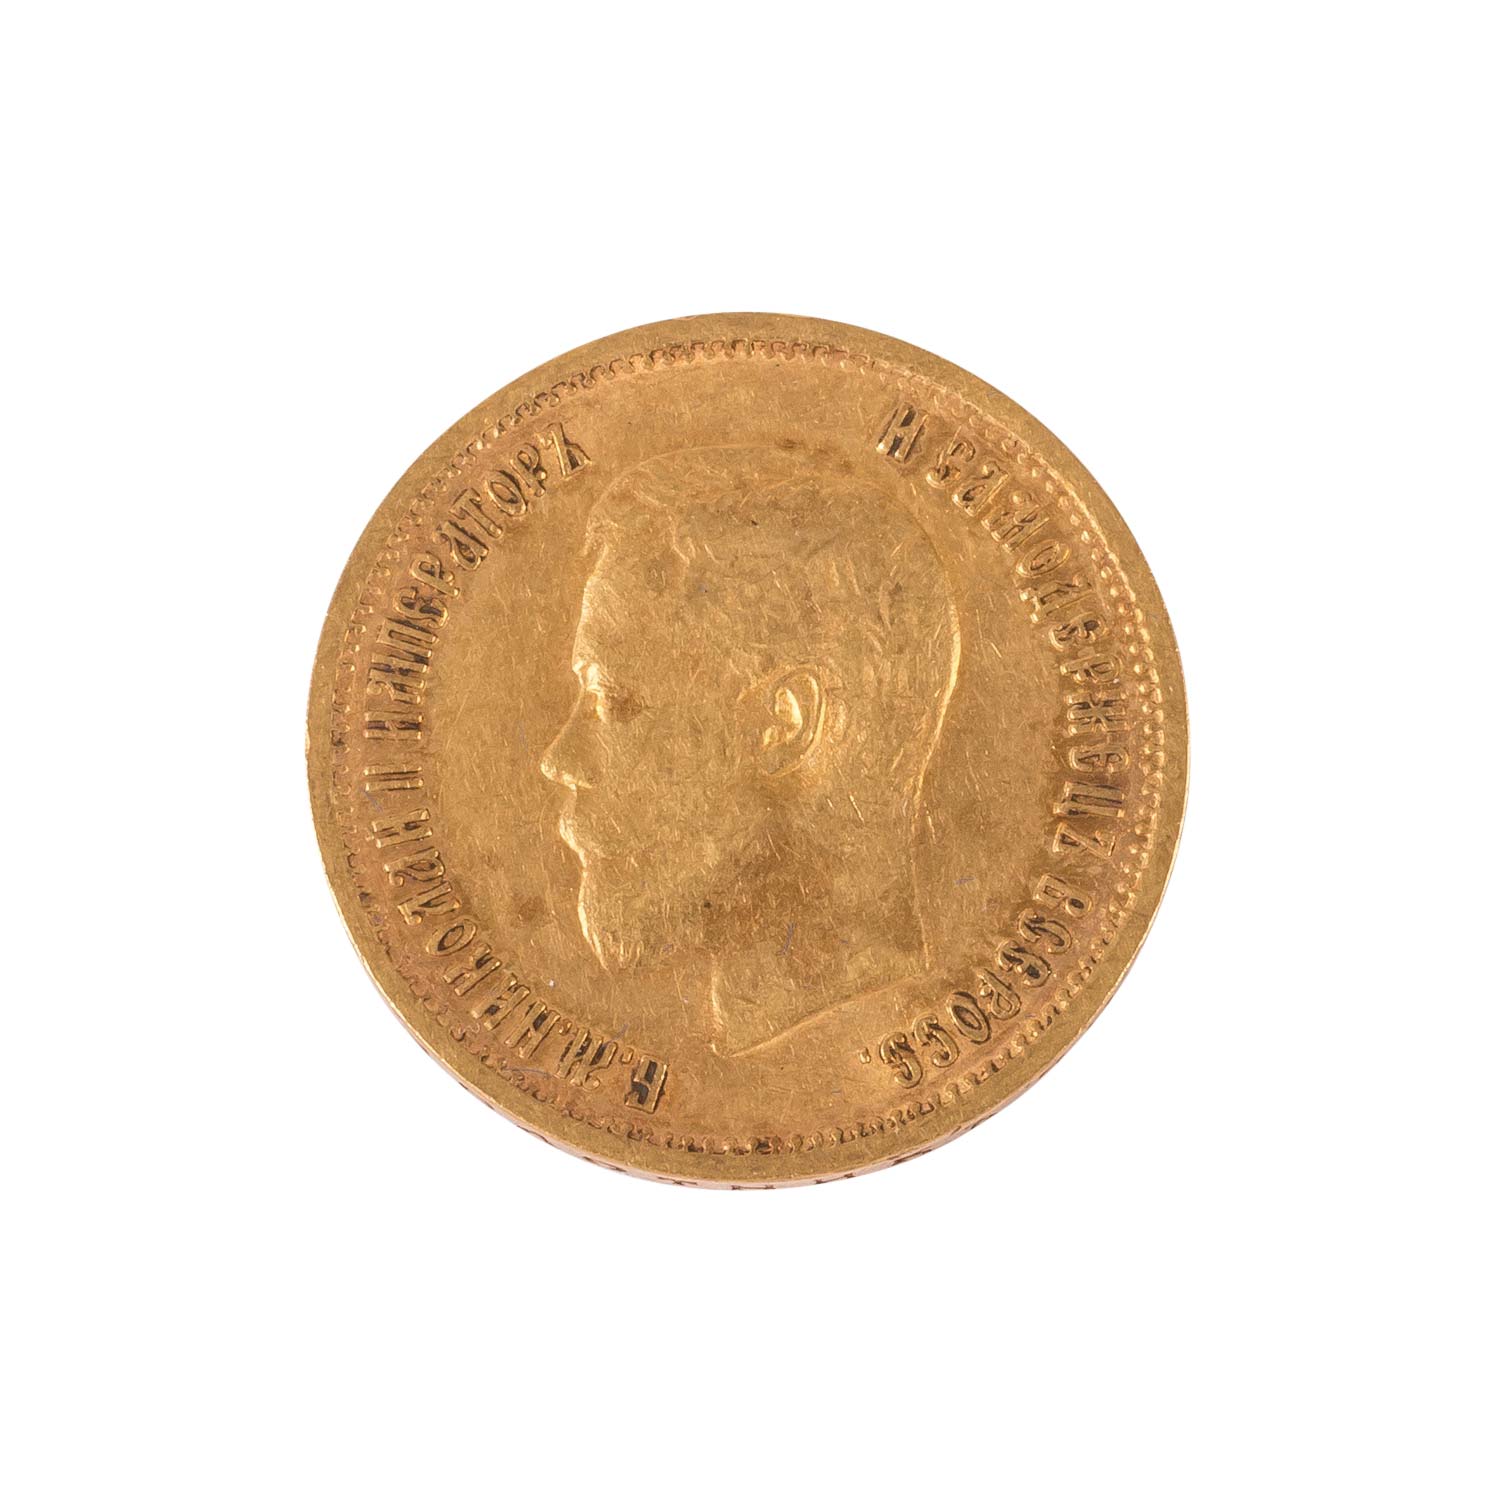 Russland - 10 Rubel 1899, Nikolaus II, GOLD,